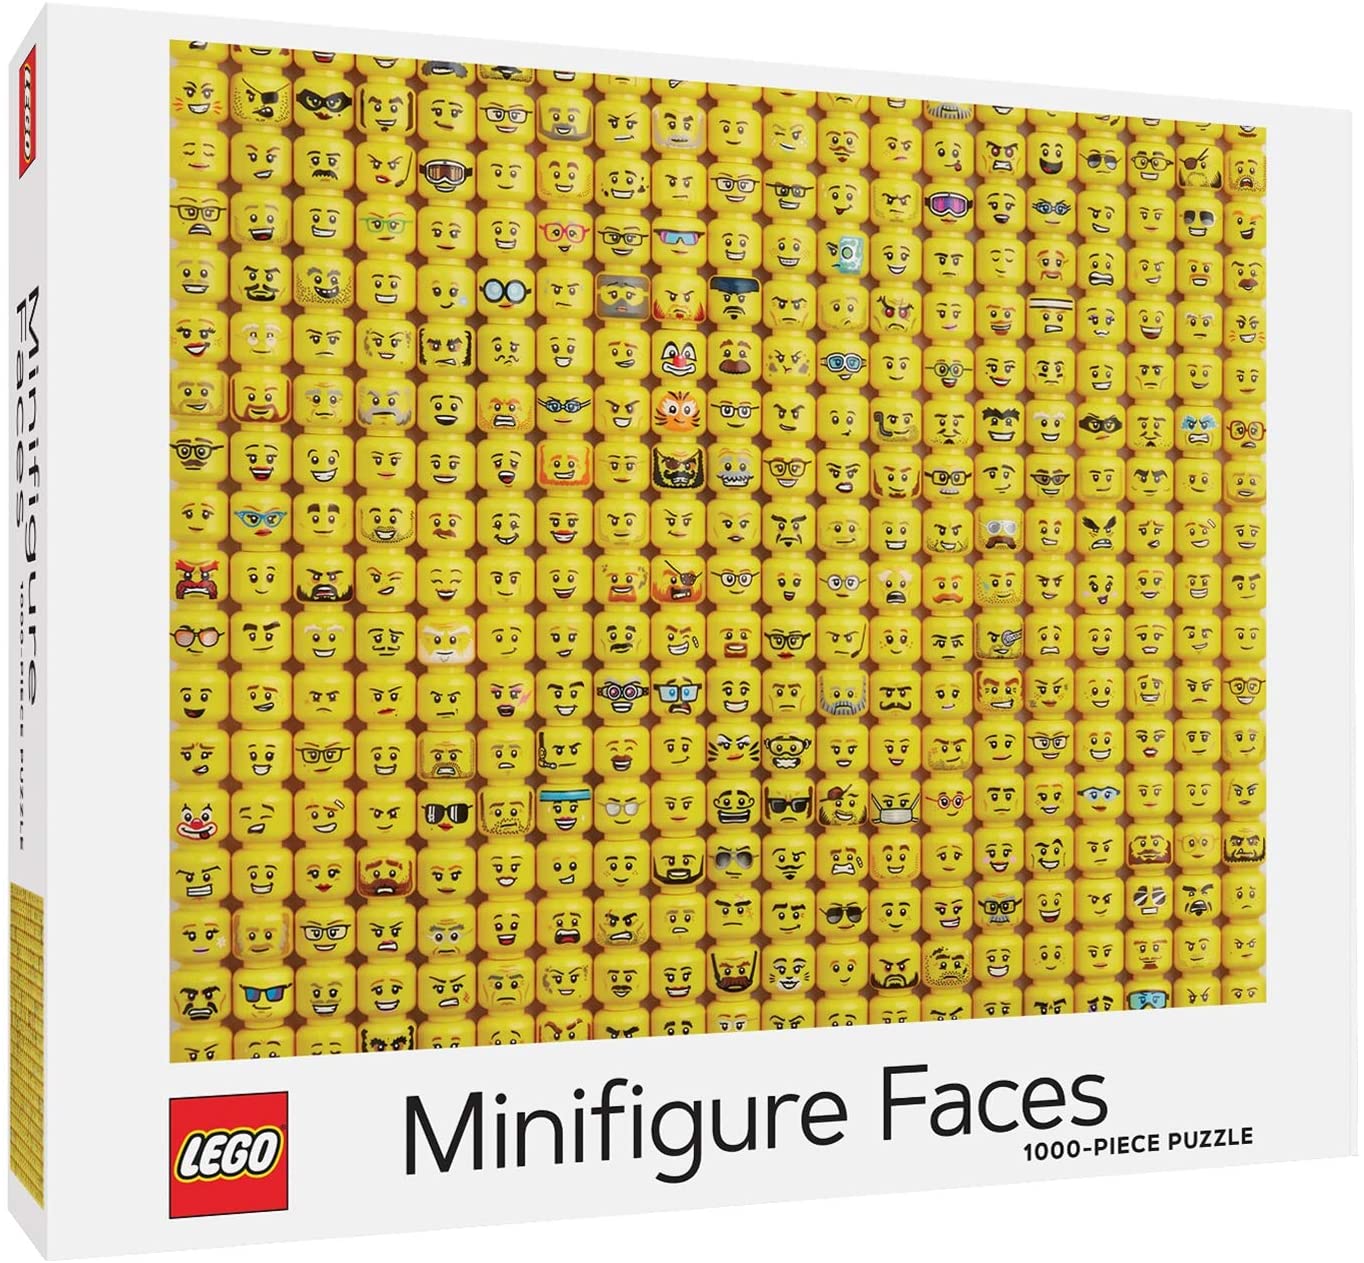 1000-Piece LEGO Minifigure Faces Jigsaw Puzzle $10 + FS w/ Amazon Prime or FS on $25+